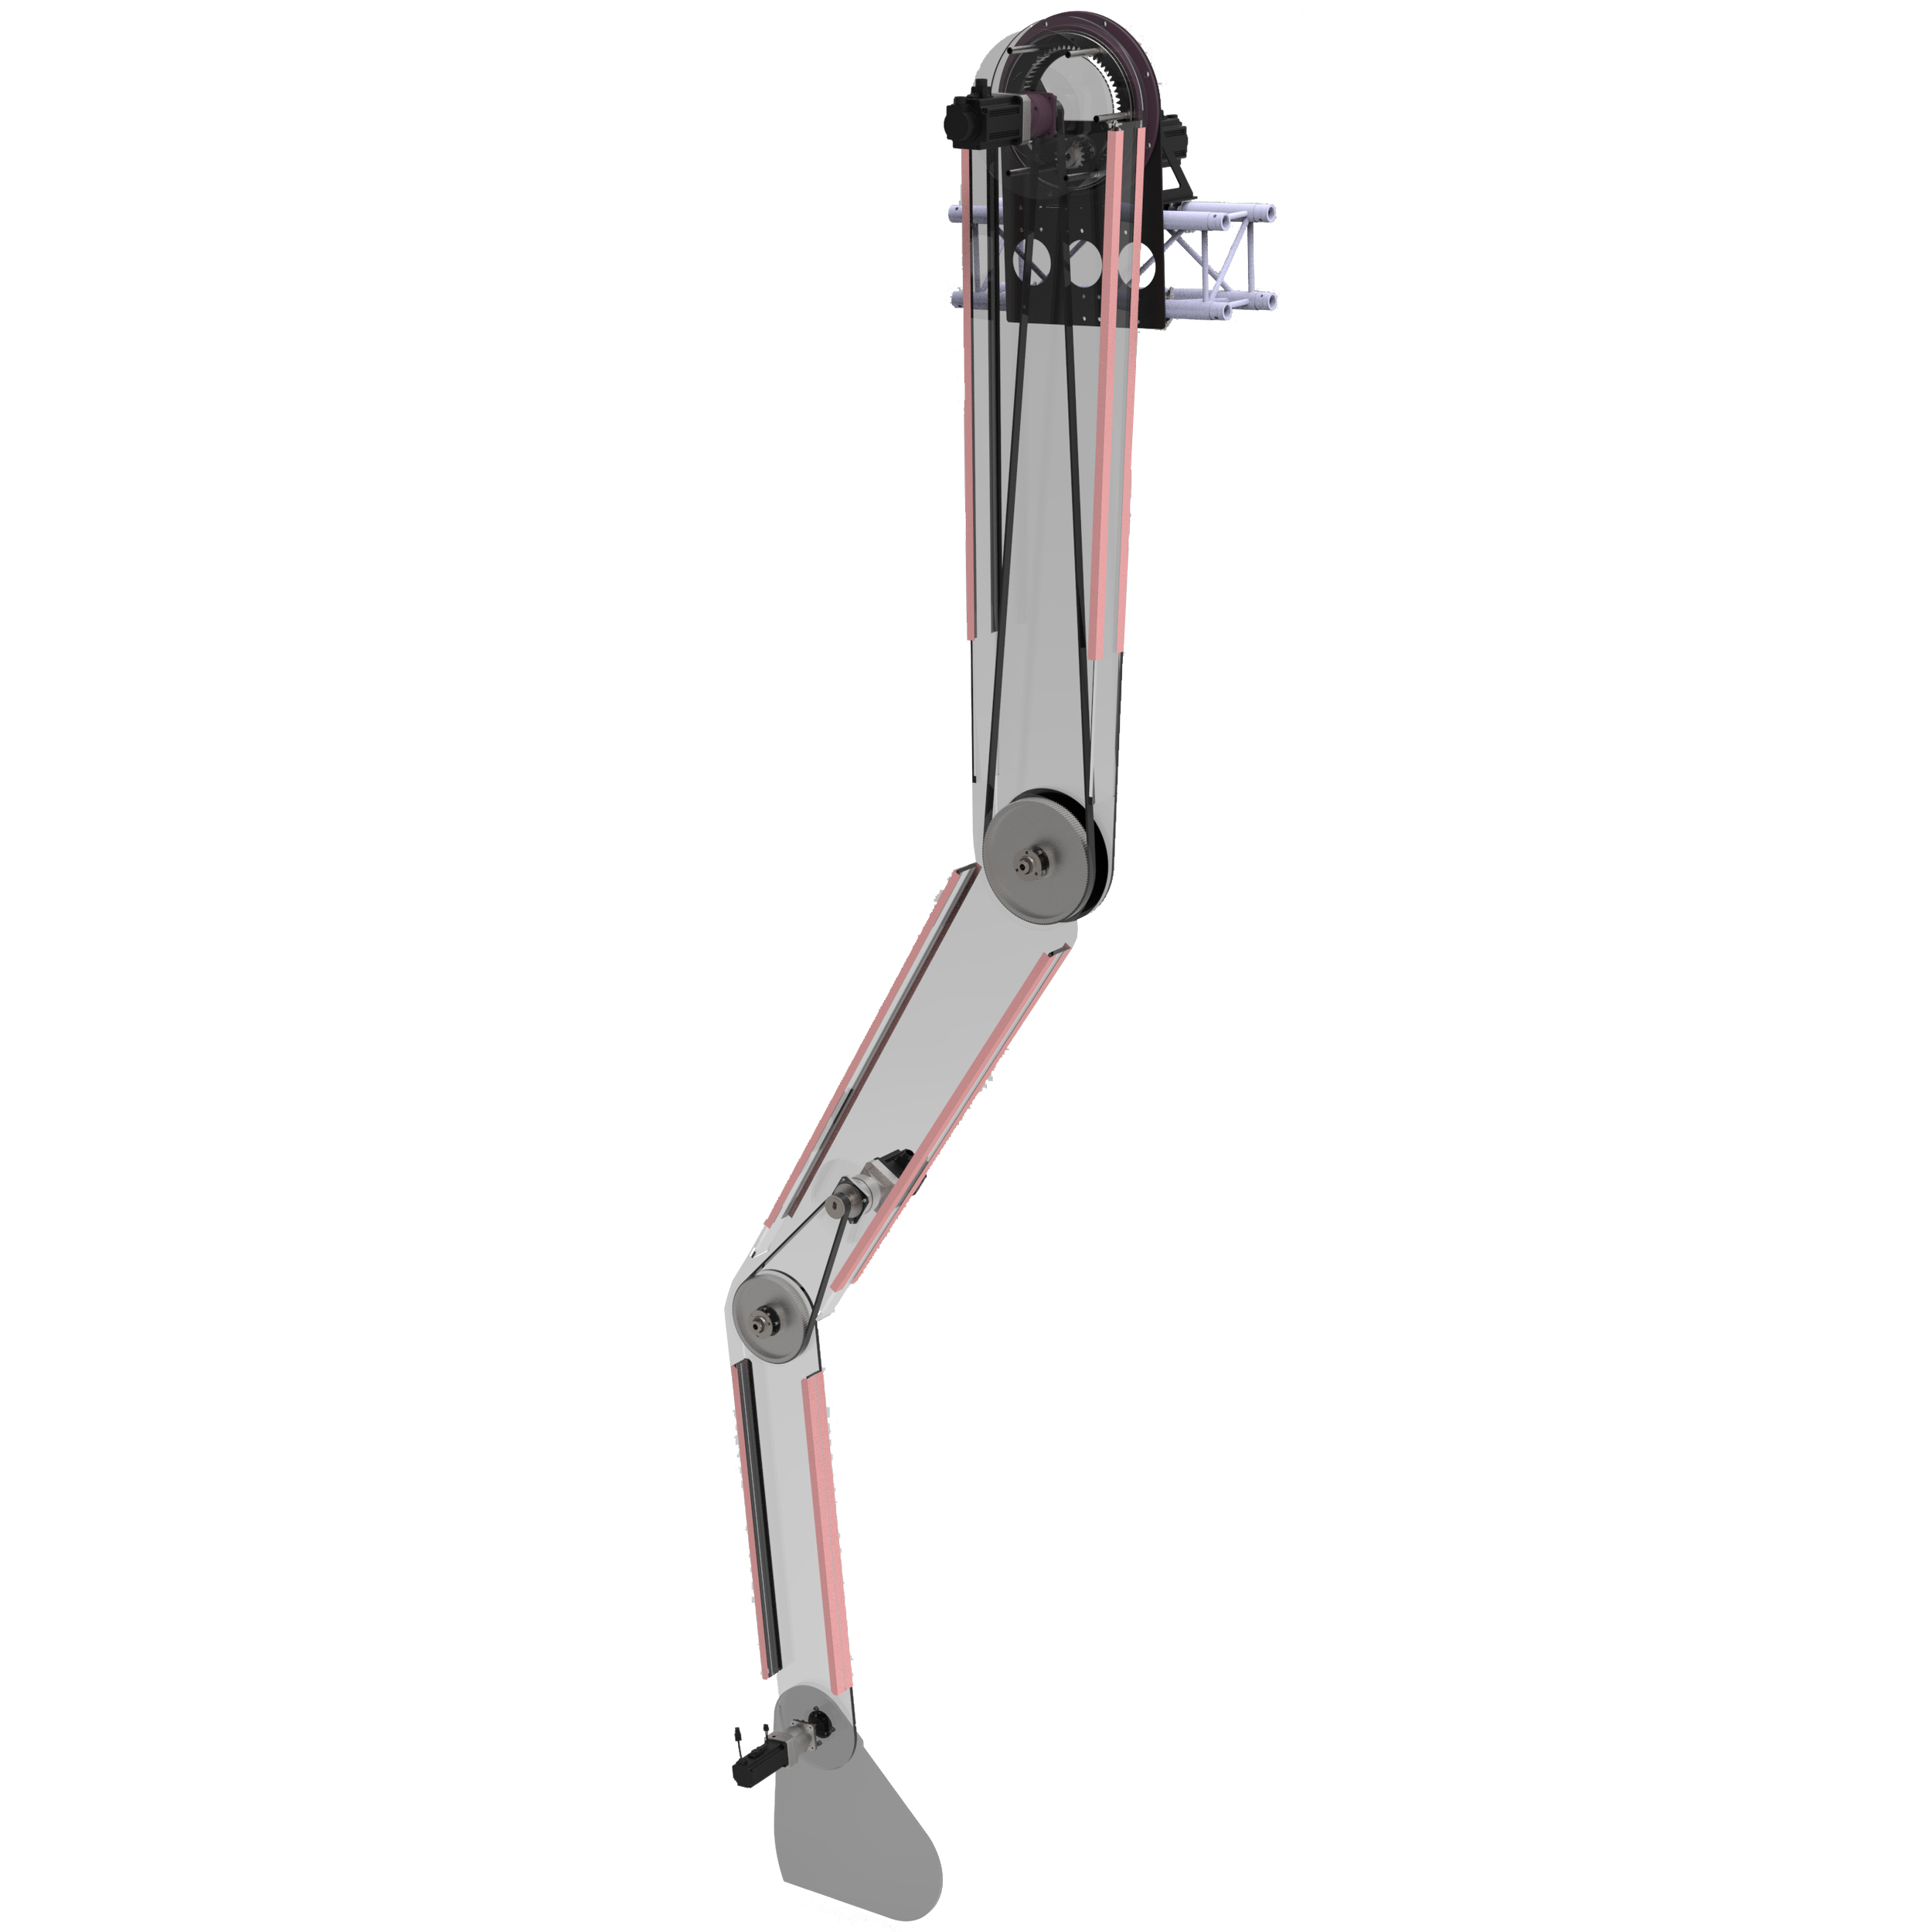 Some Design Engineering Giant Bull Animatronic Rendering Leg Servo motors